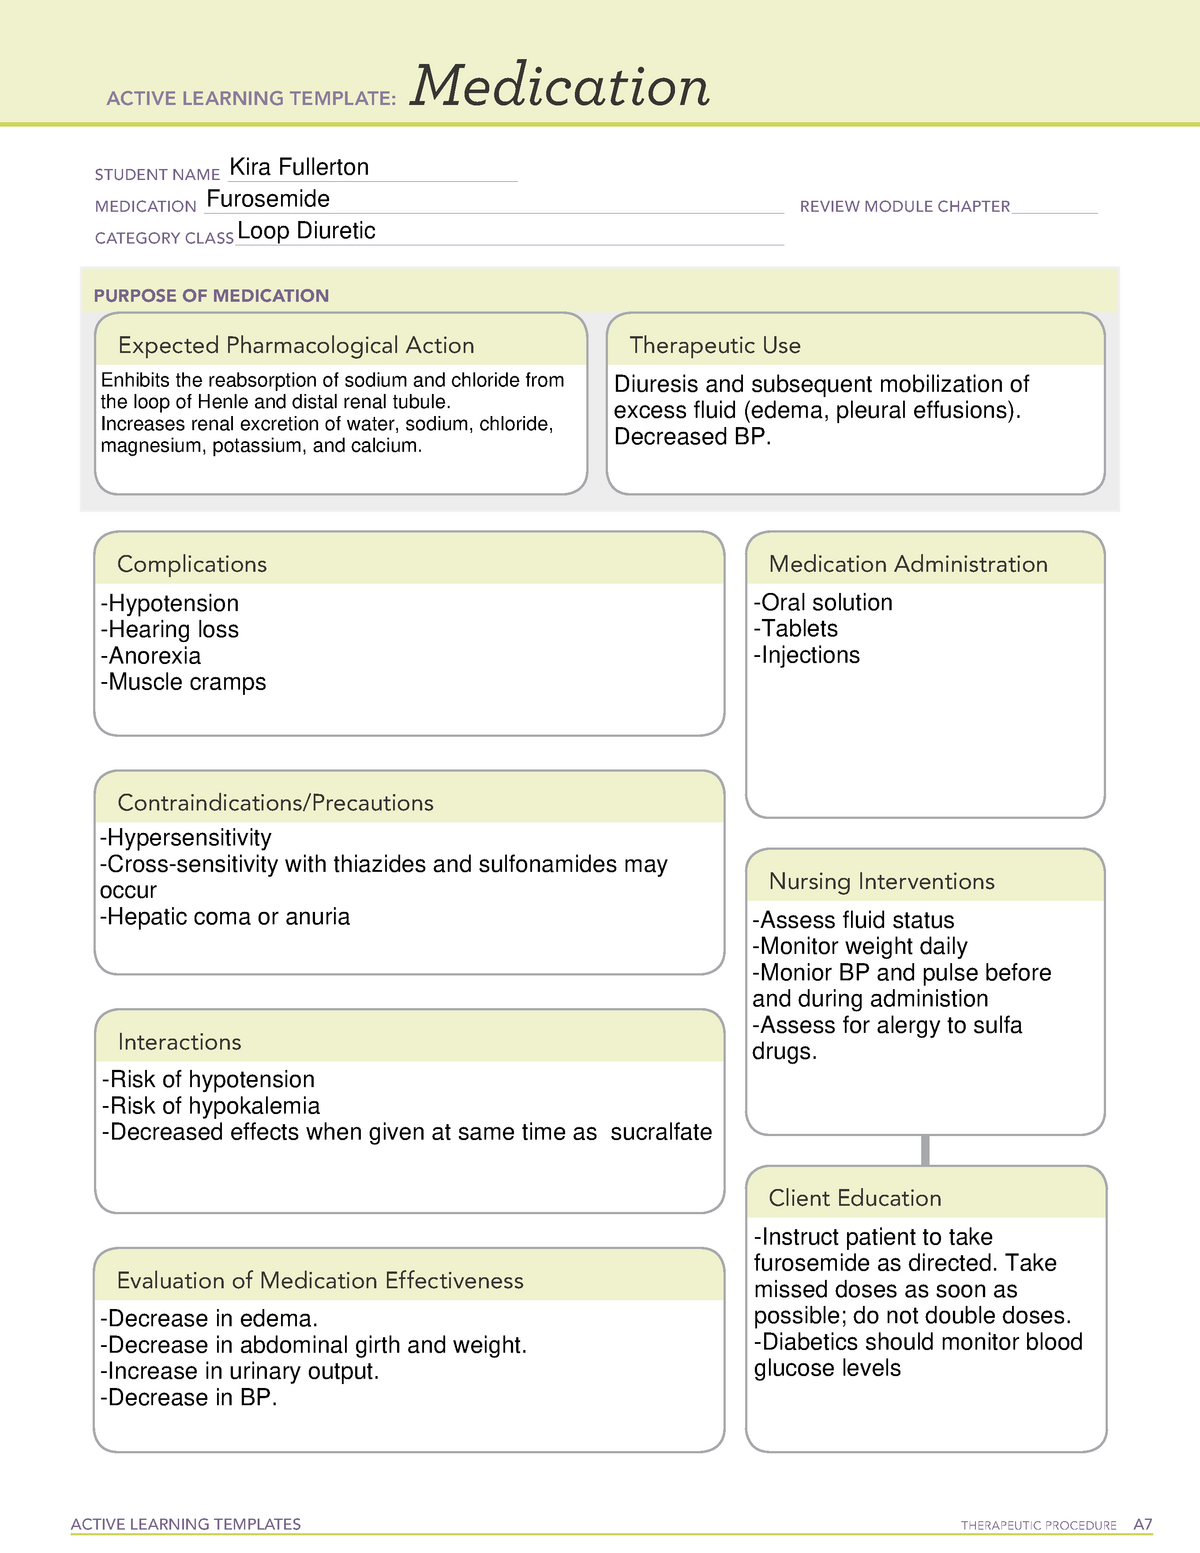 MED Furosemide ATI medications sheet ACTIVE LEARNING TEMPLATES